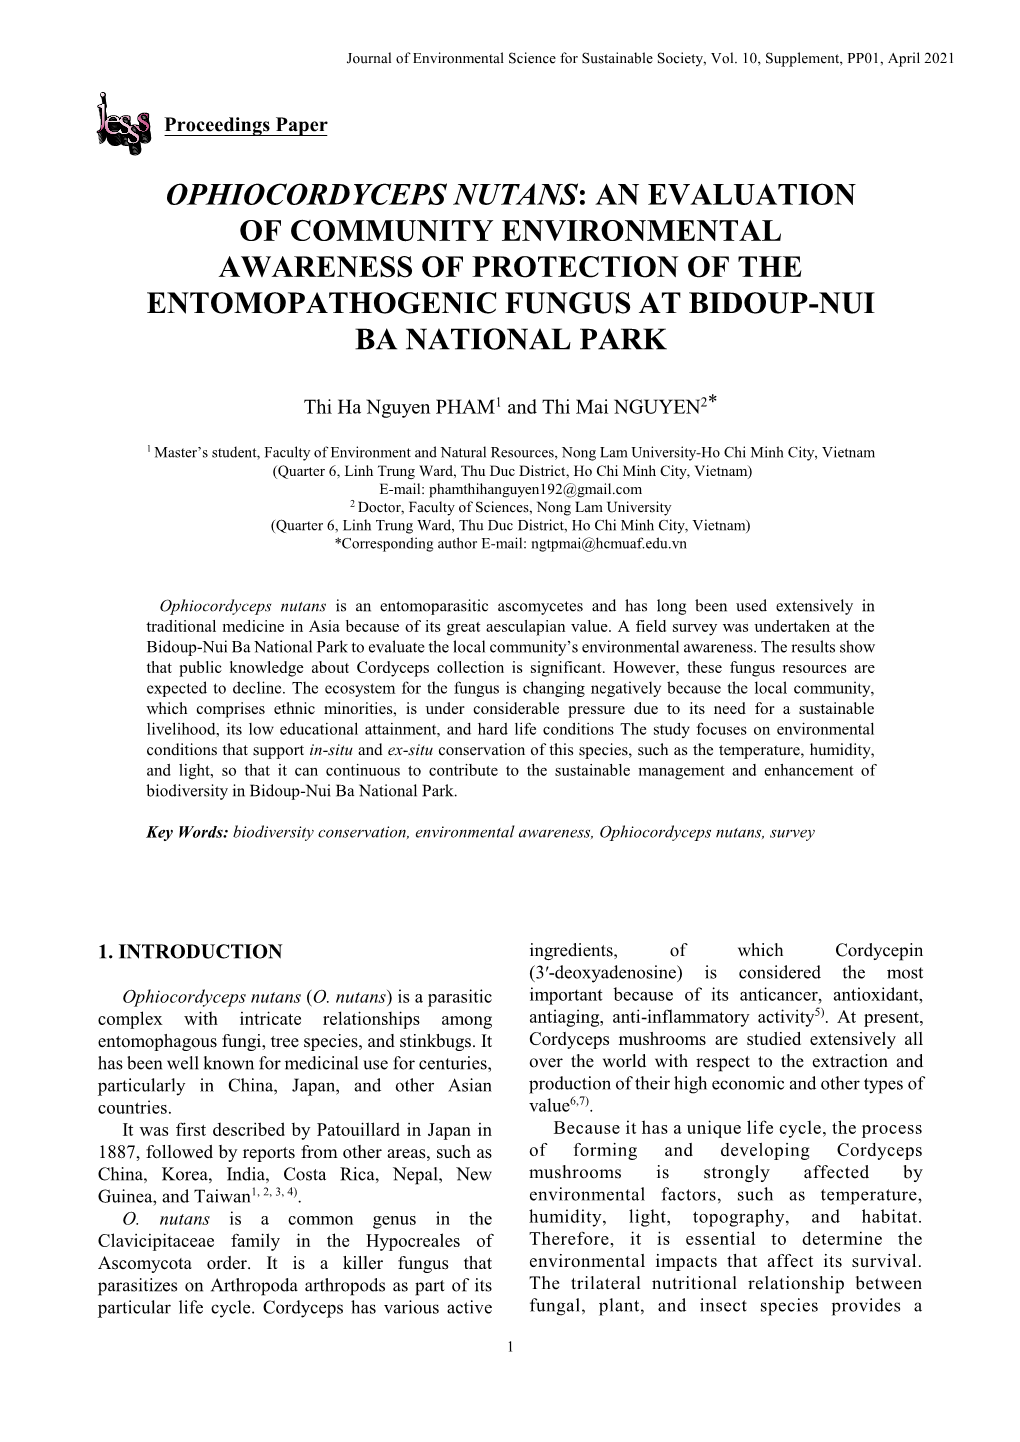 Ophiocordyceps Nutans: an Evaluation of Community Environmental Awareness of Protection of the Entomopathogenic Fungus at Bidoup-Nui Ba National Park